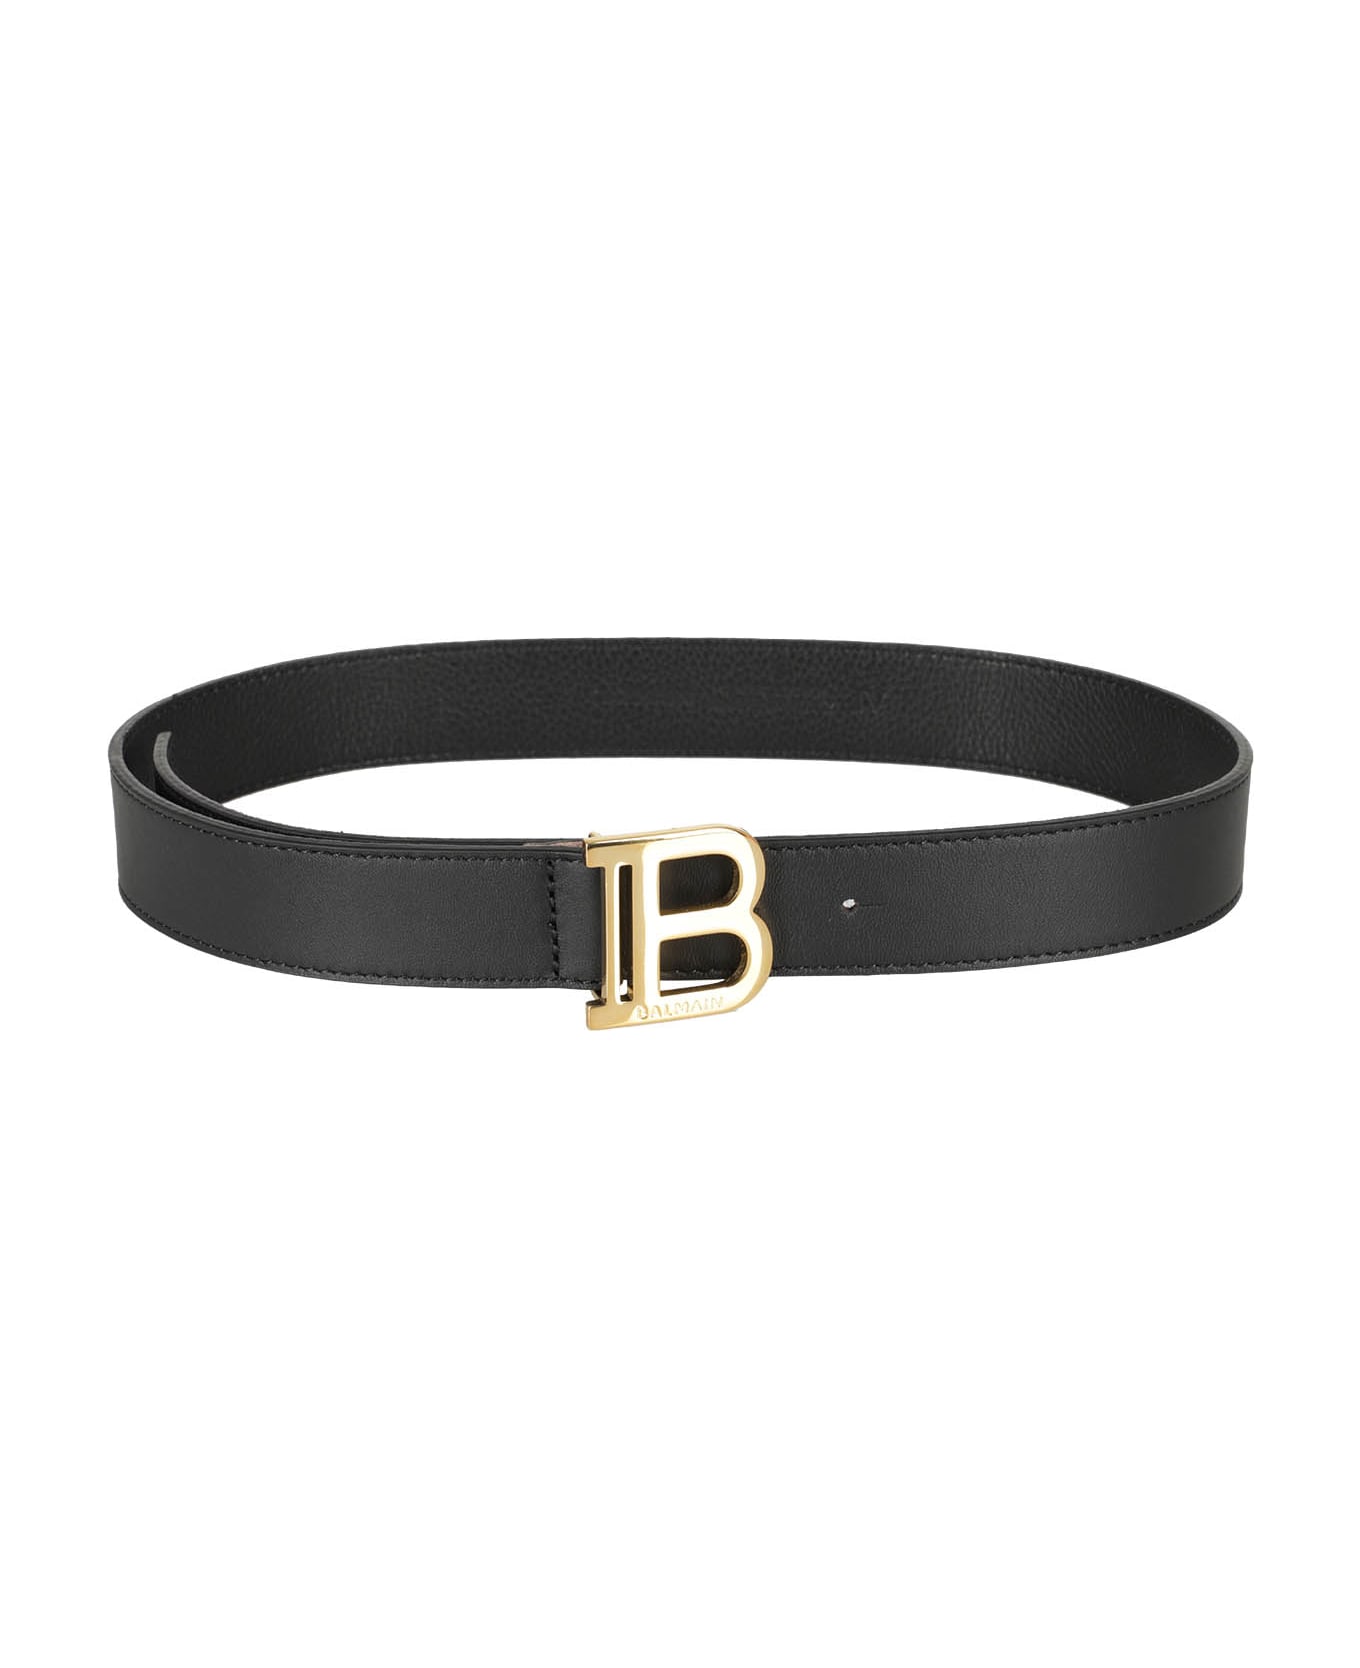 Balmain Belts - Or Black Gold